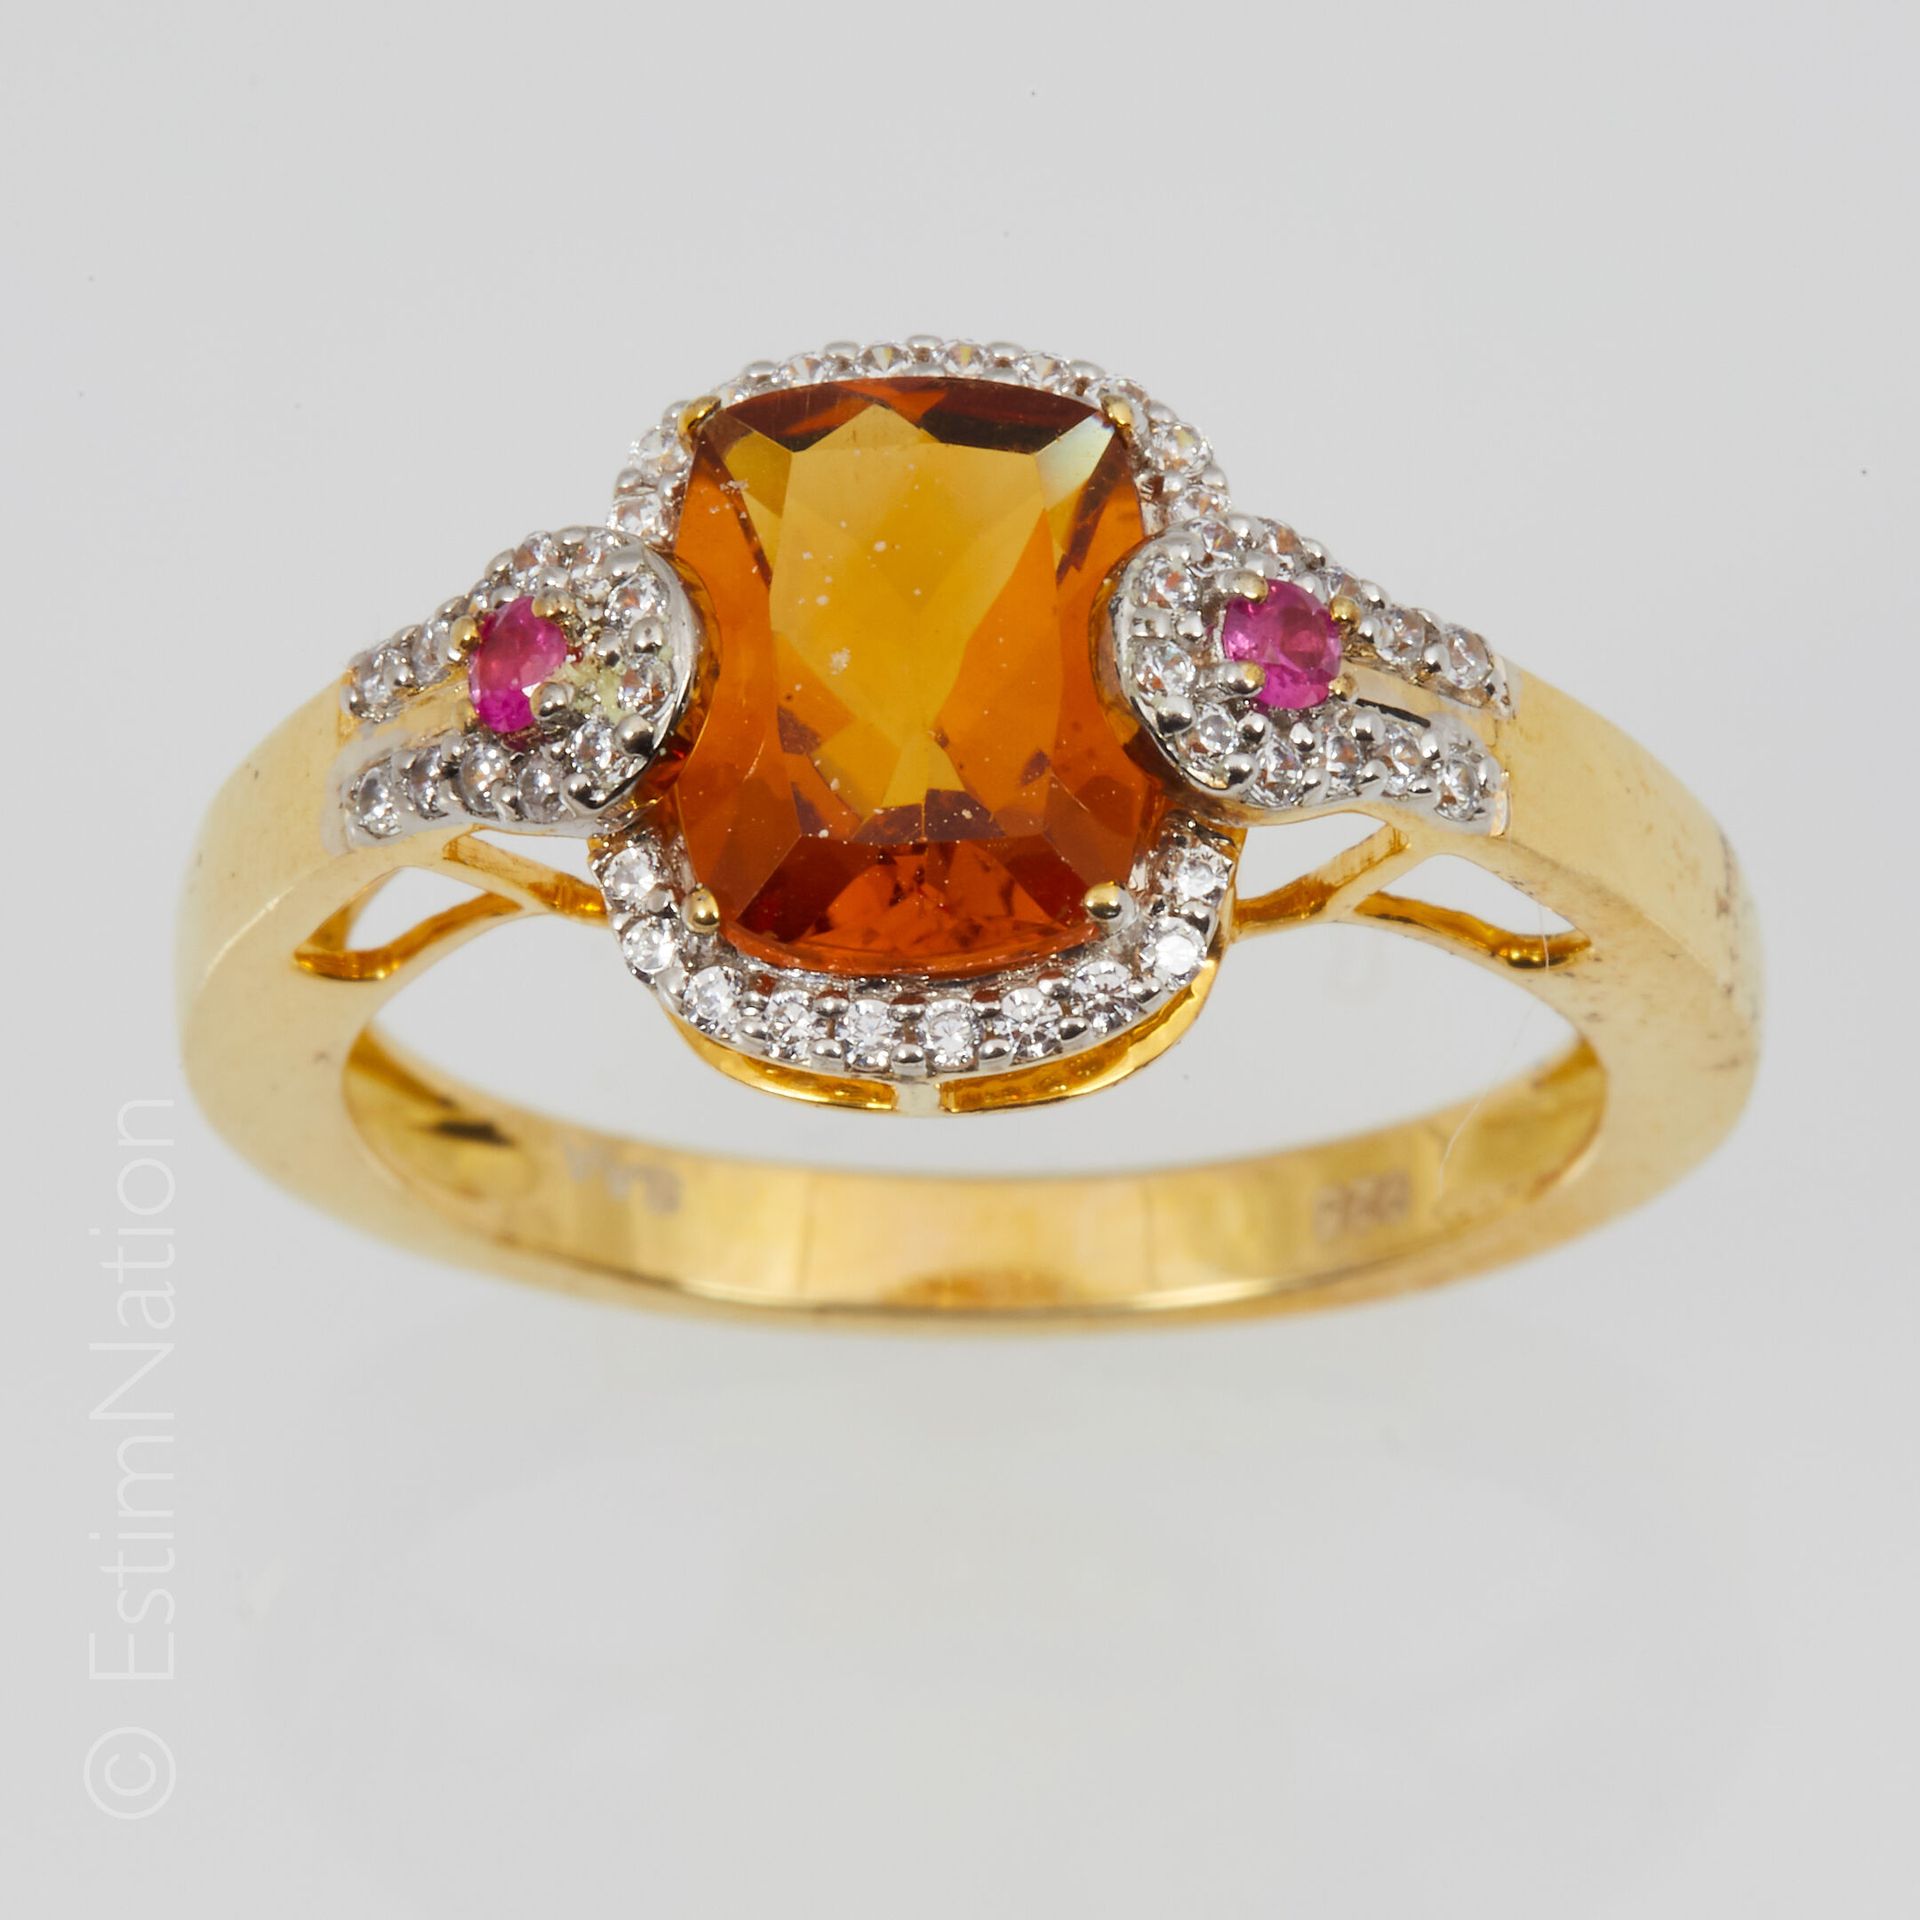 BAGUE VERMEIL ET BÉRYL JAUNE Ring in vermeil (925 thousandths), decorated with a&hellip;